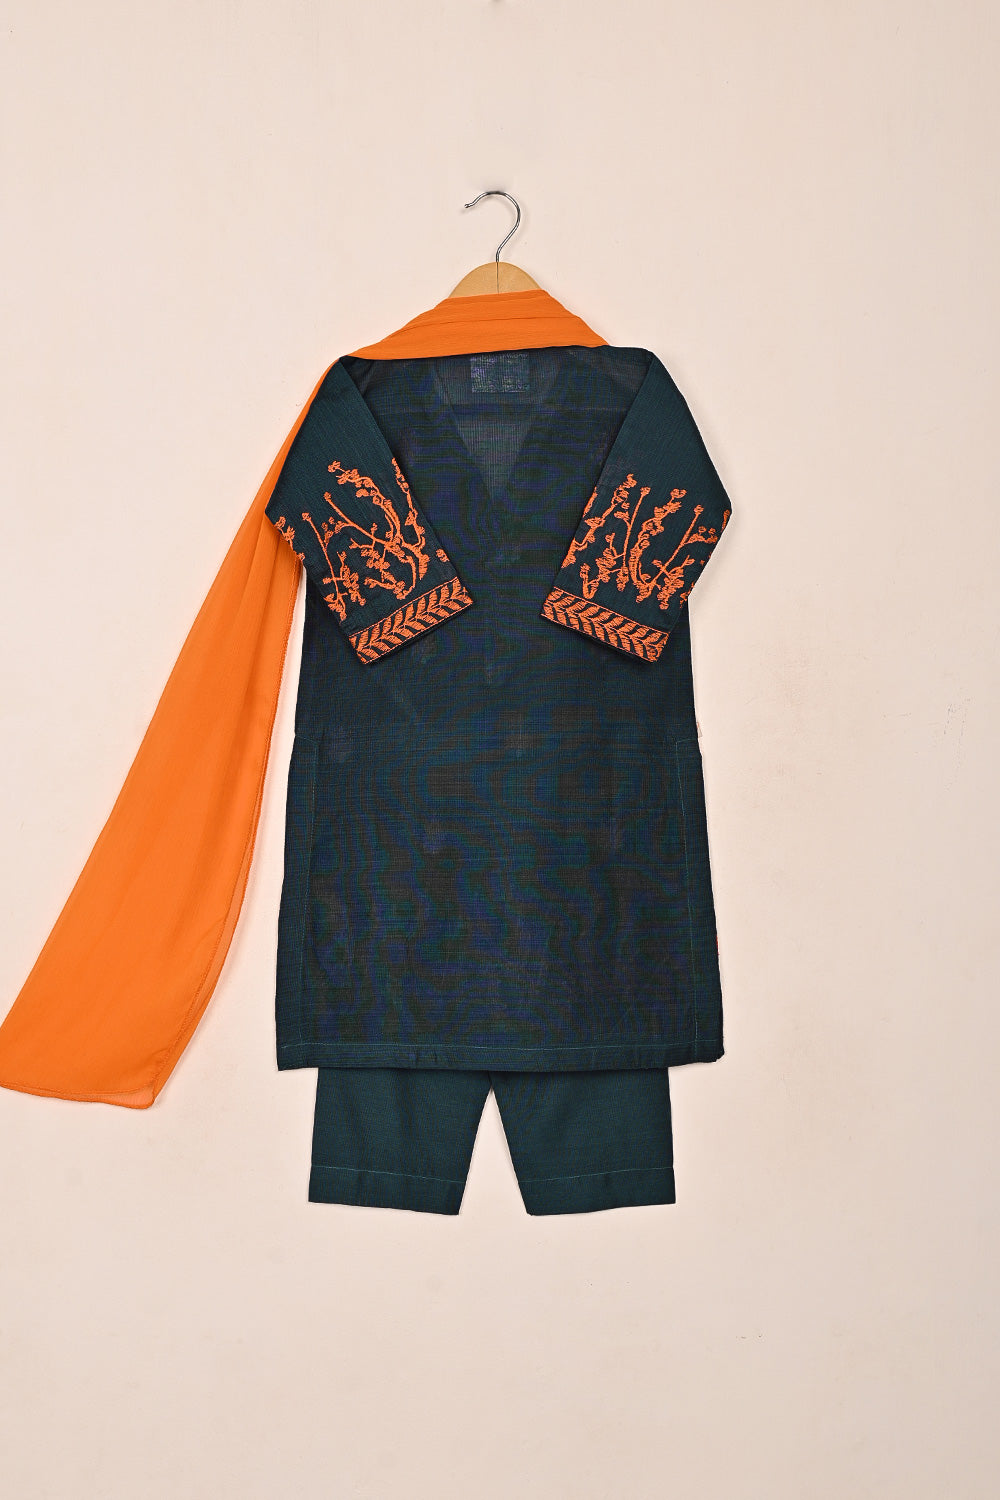 TKF-211-Turquoise - Kids 3Pc Ready to Wear Embroidered Khaddi Fabric Dress